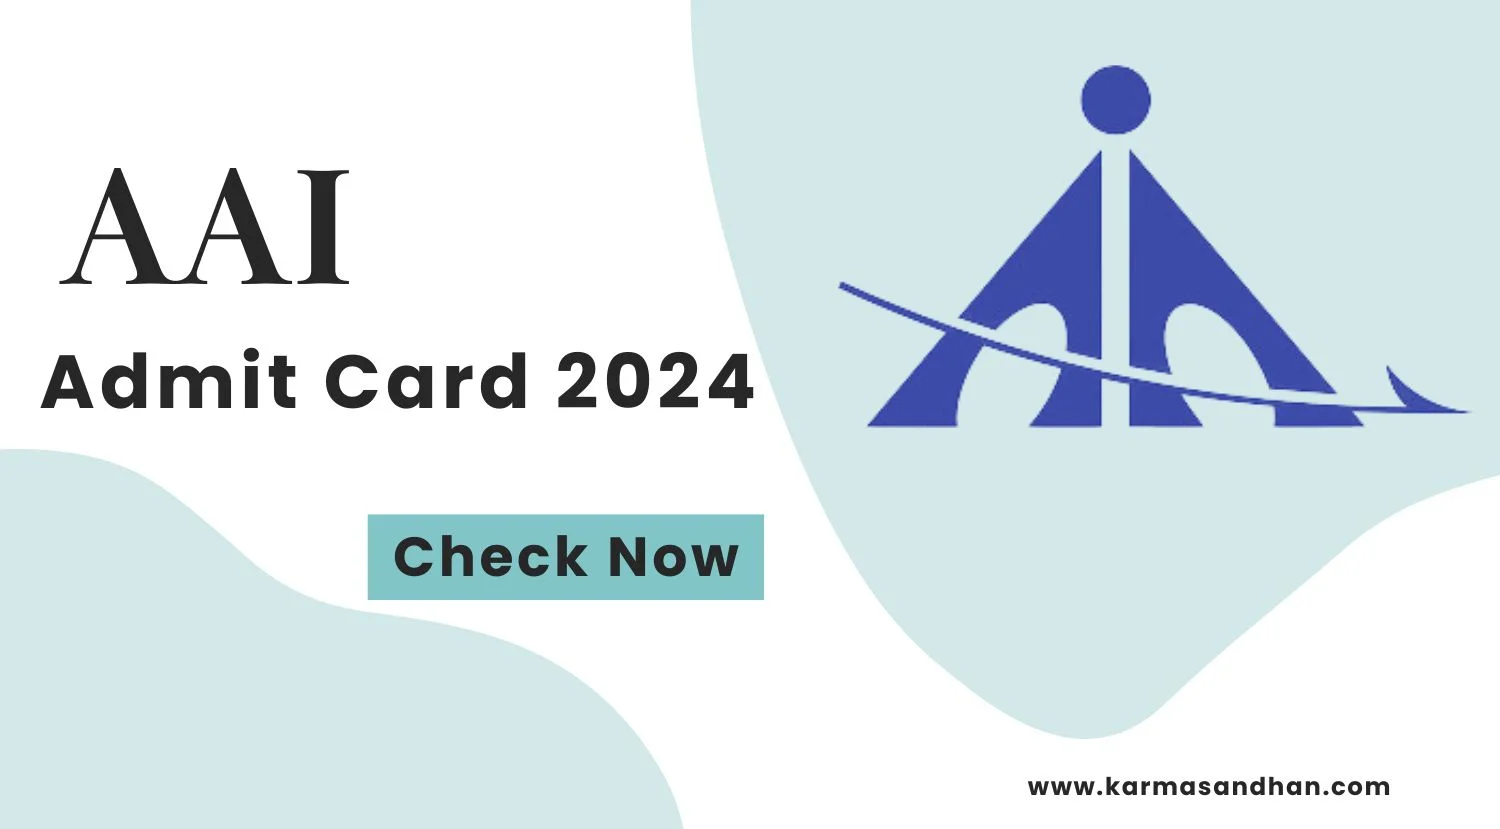 AAI Admit Card 2024